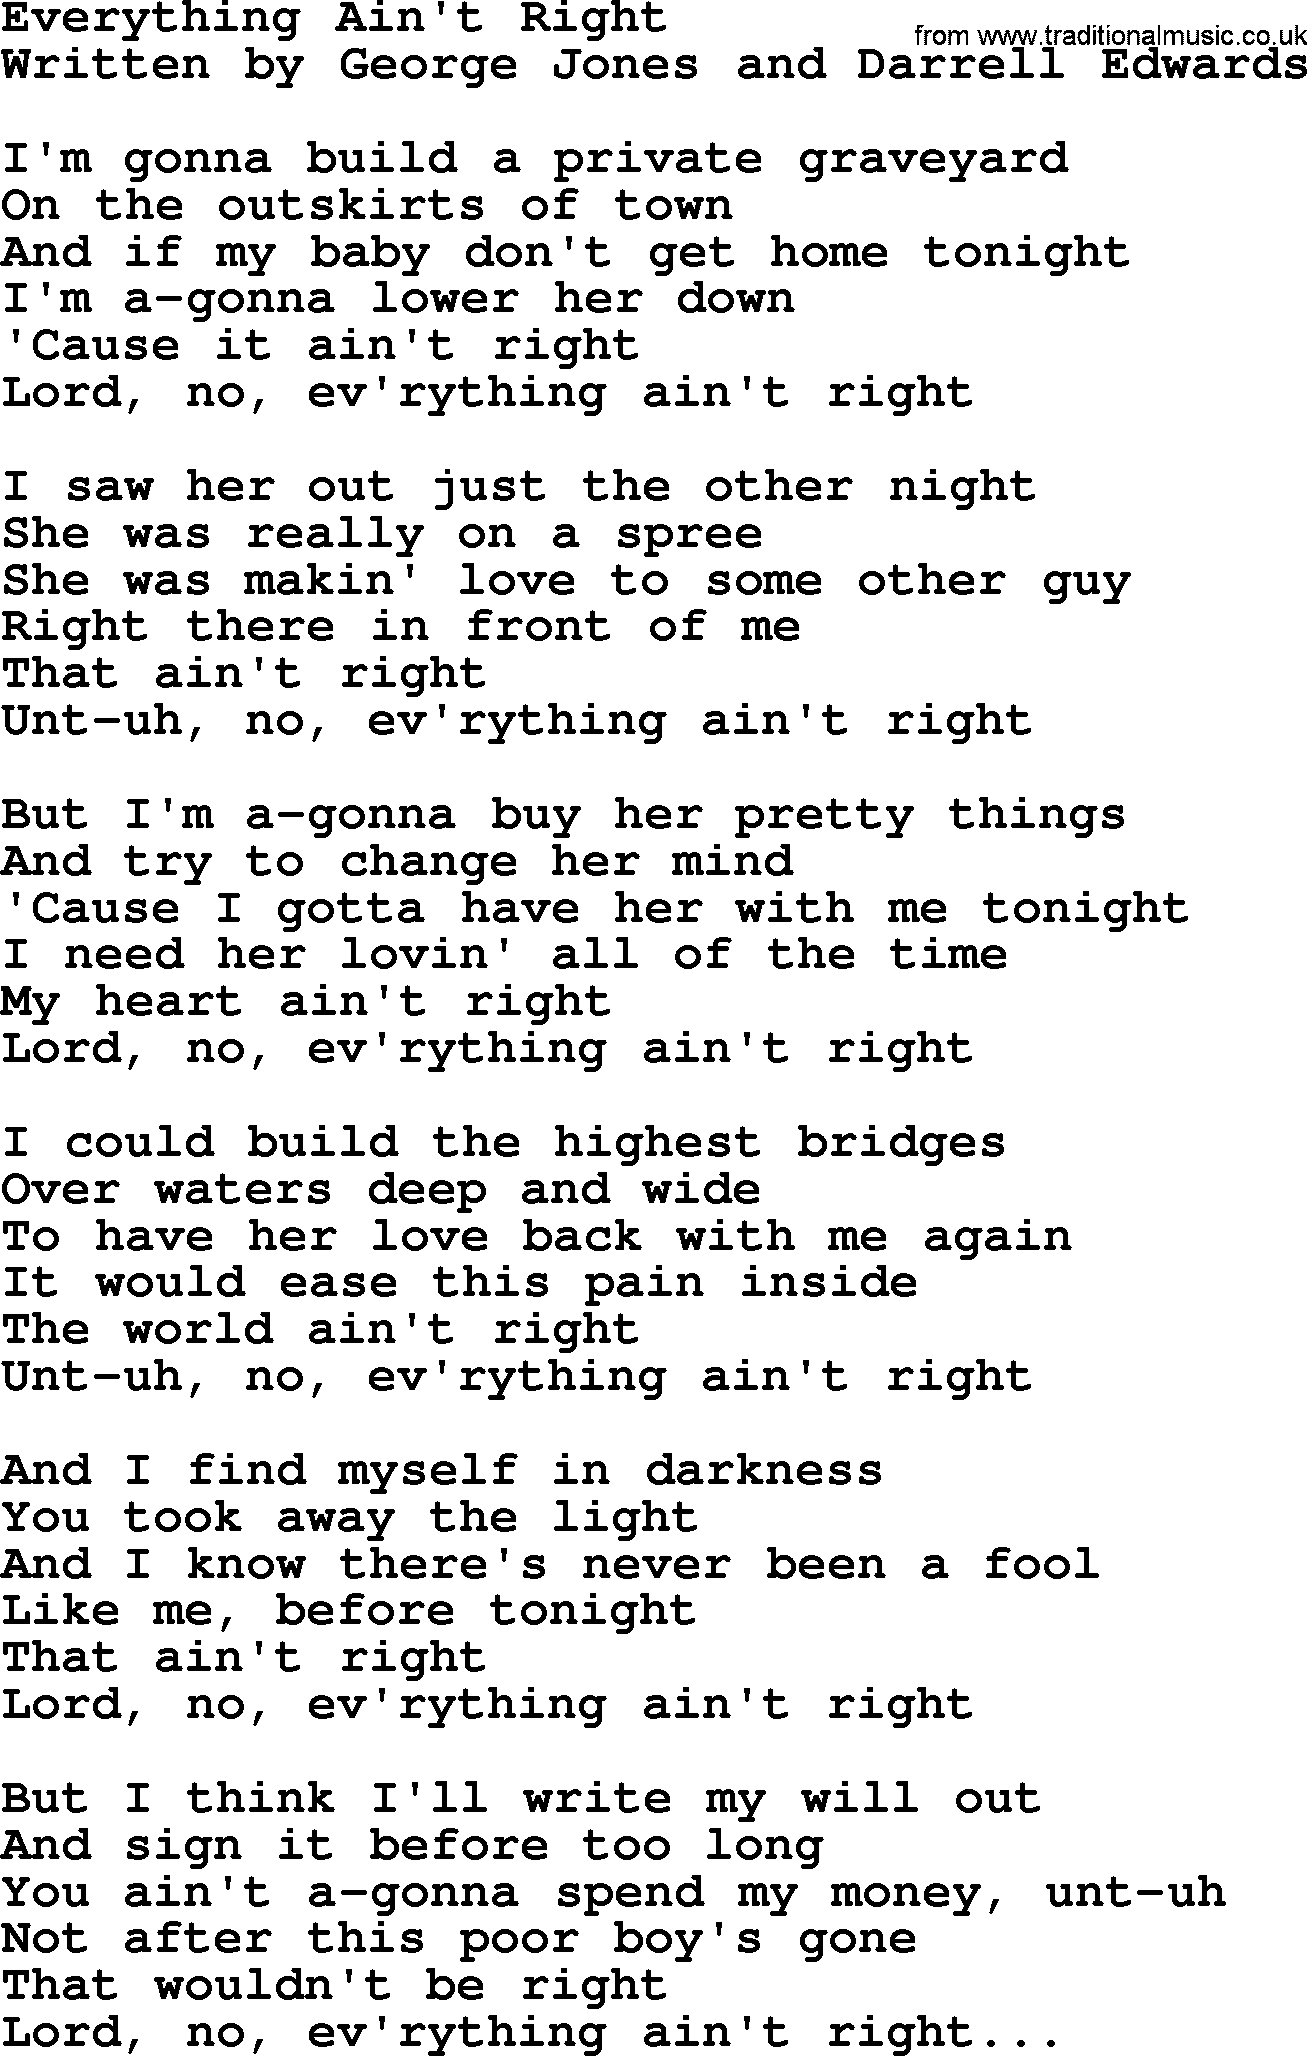 George Jones song: Everything Ain't Right, lyrics